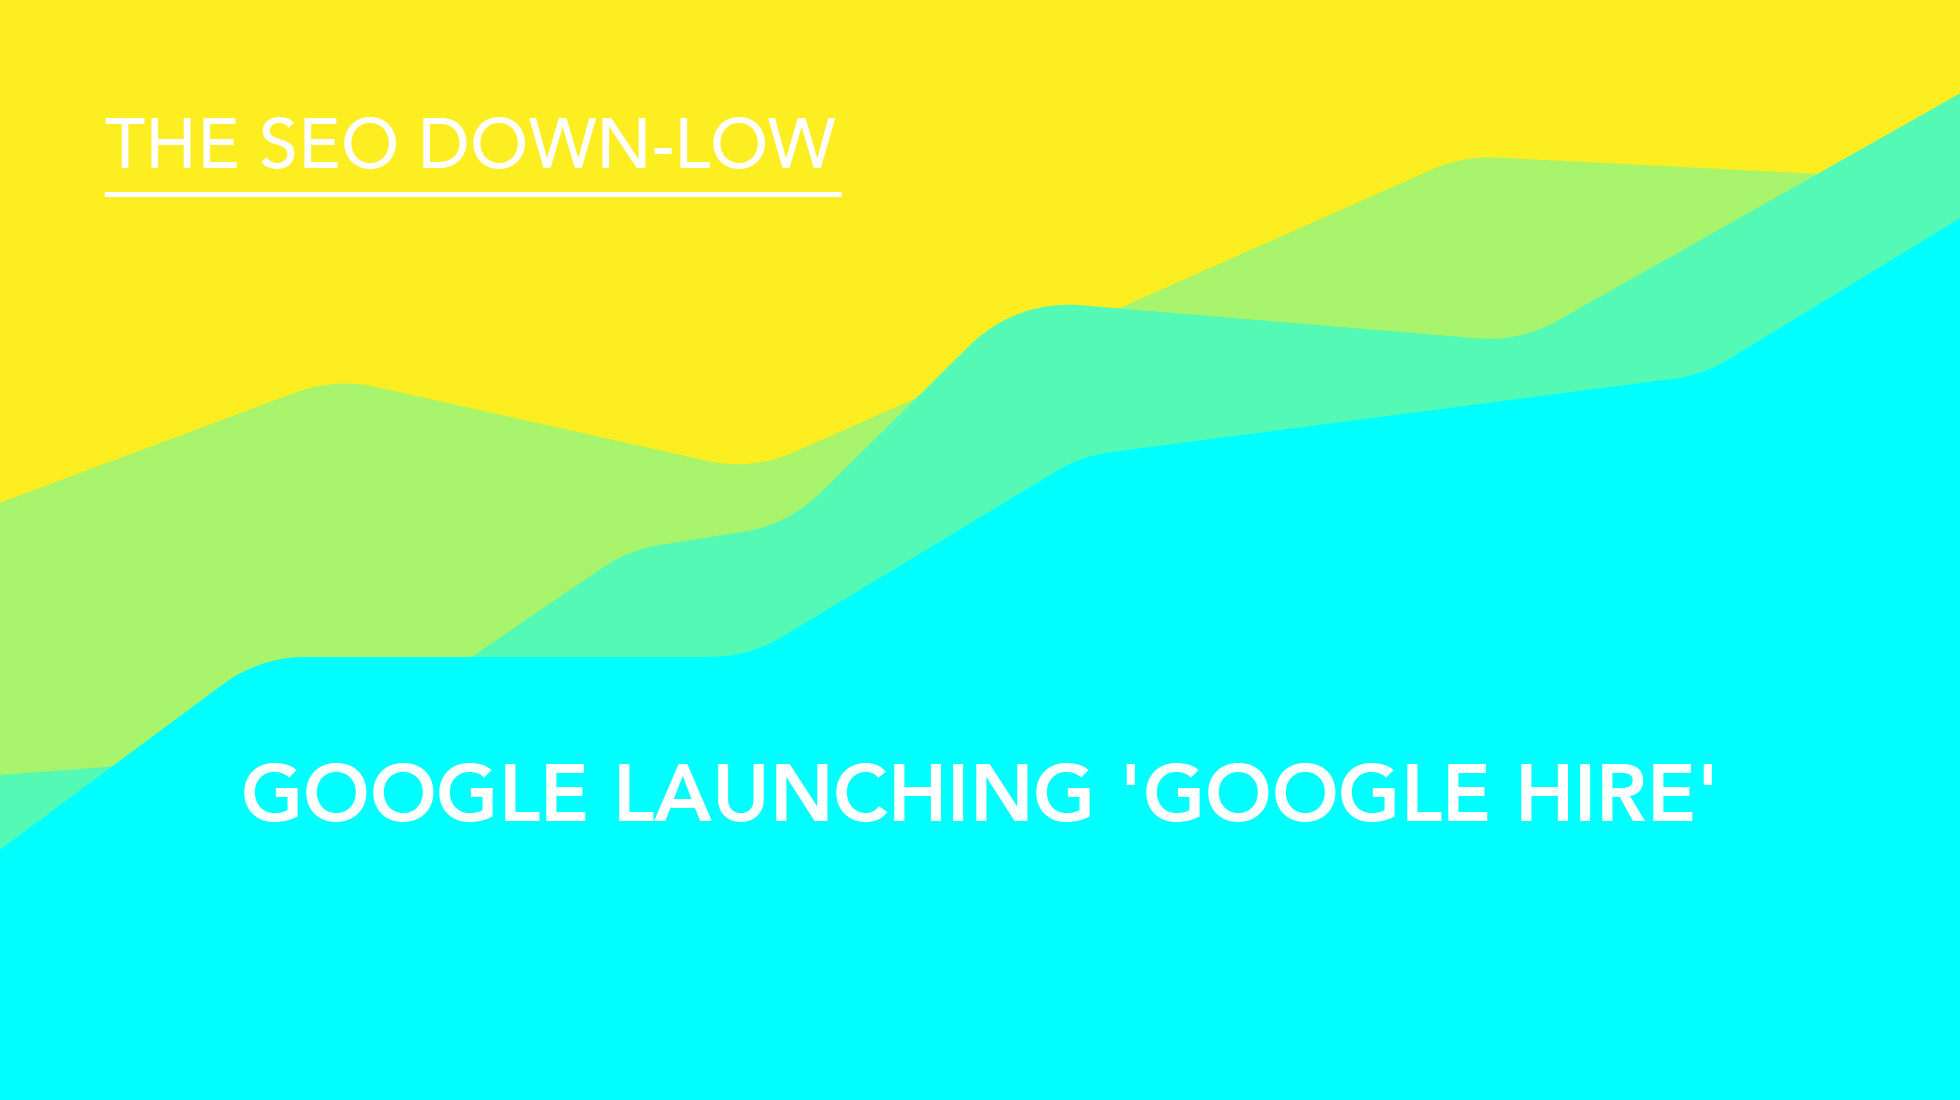 Google Launches Google Hire